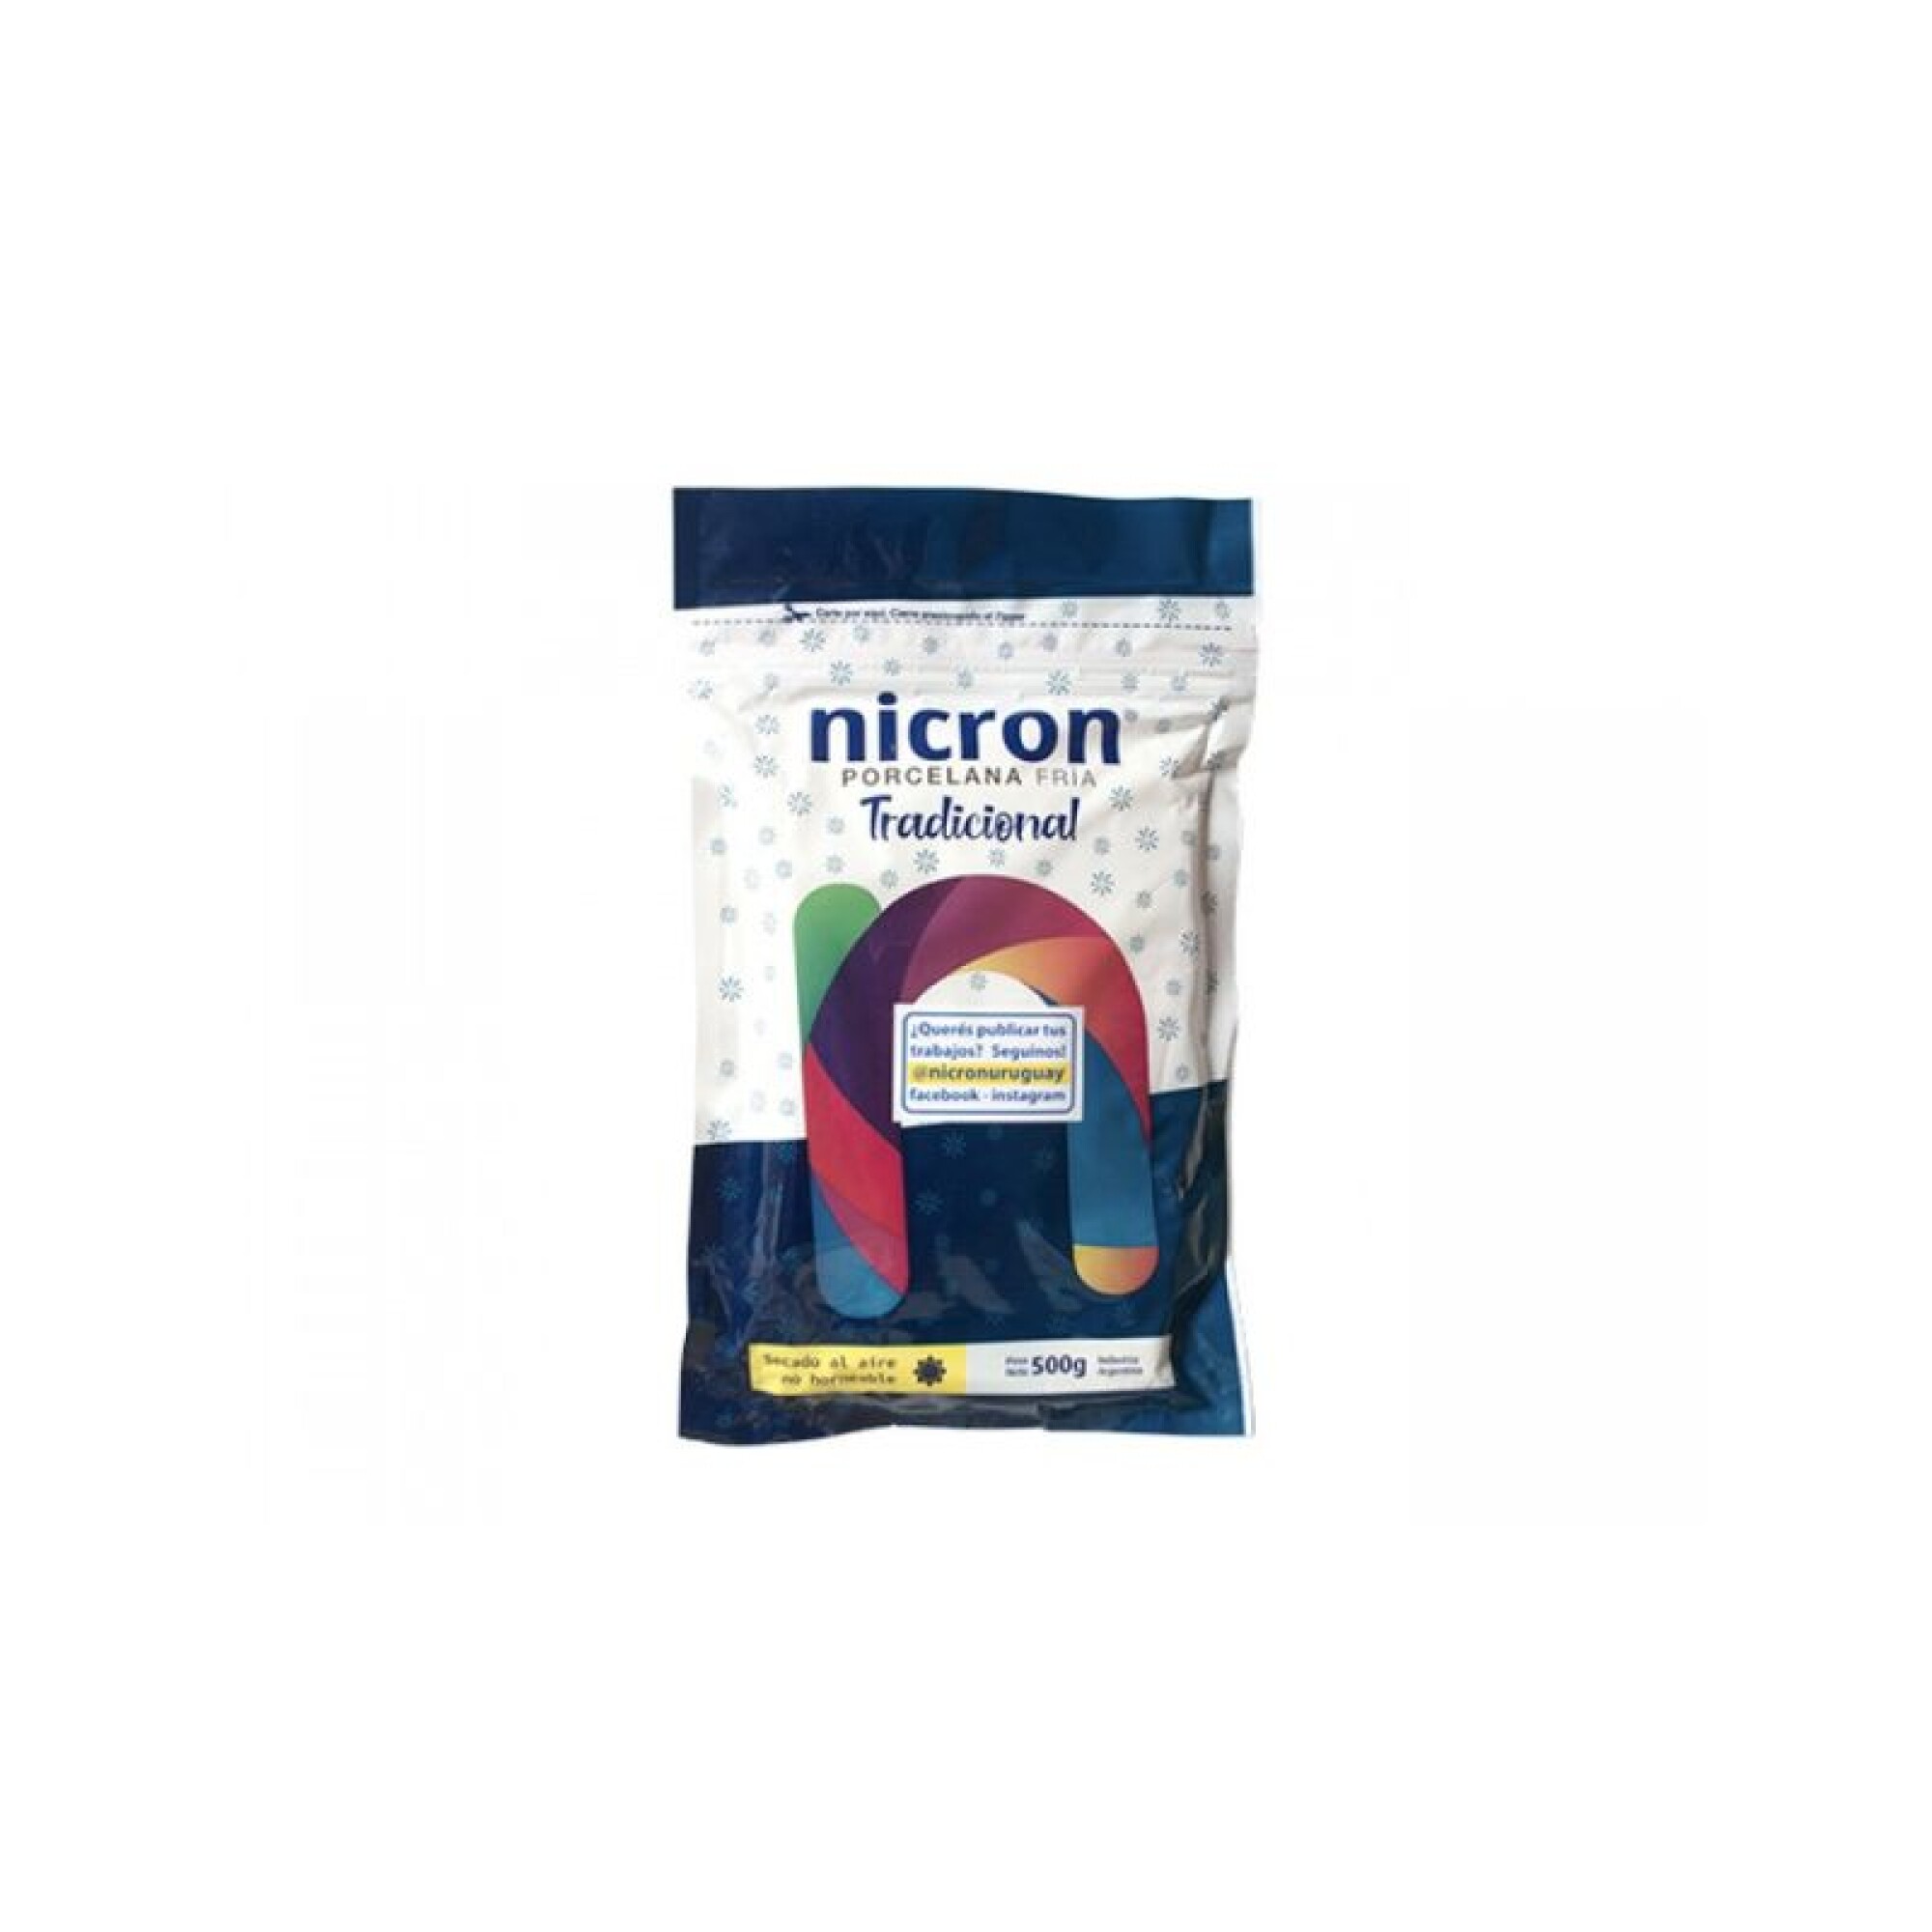 Porcelana fría Nicron - 500 g — Infantozzi